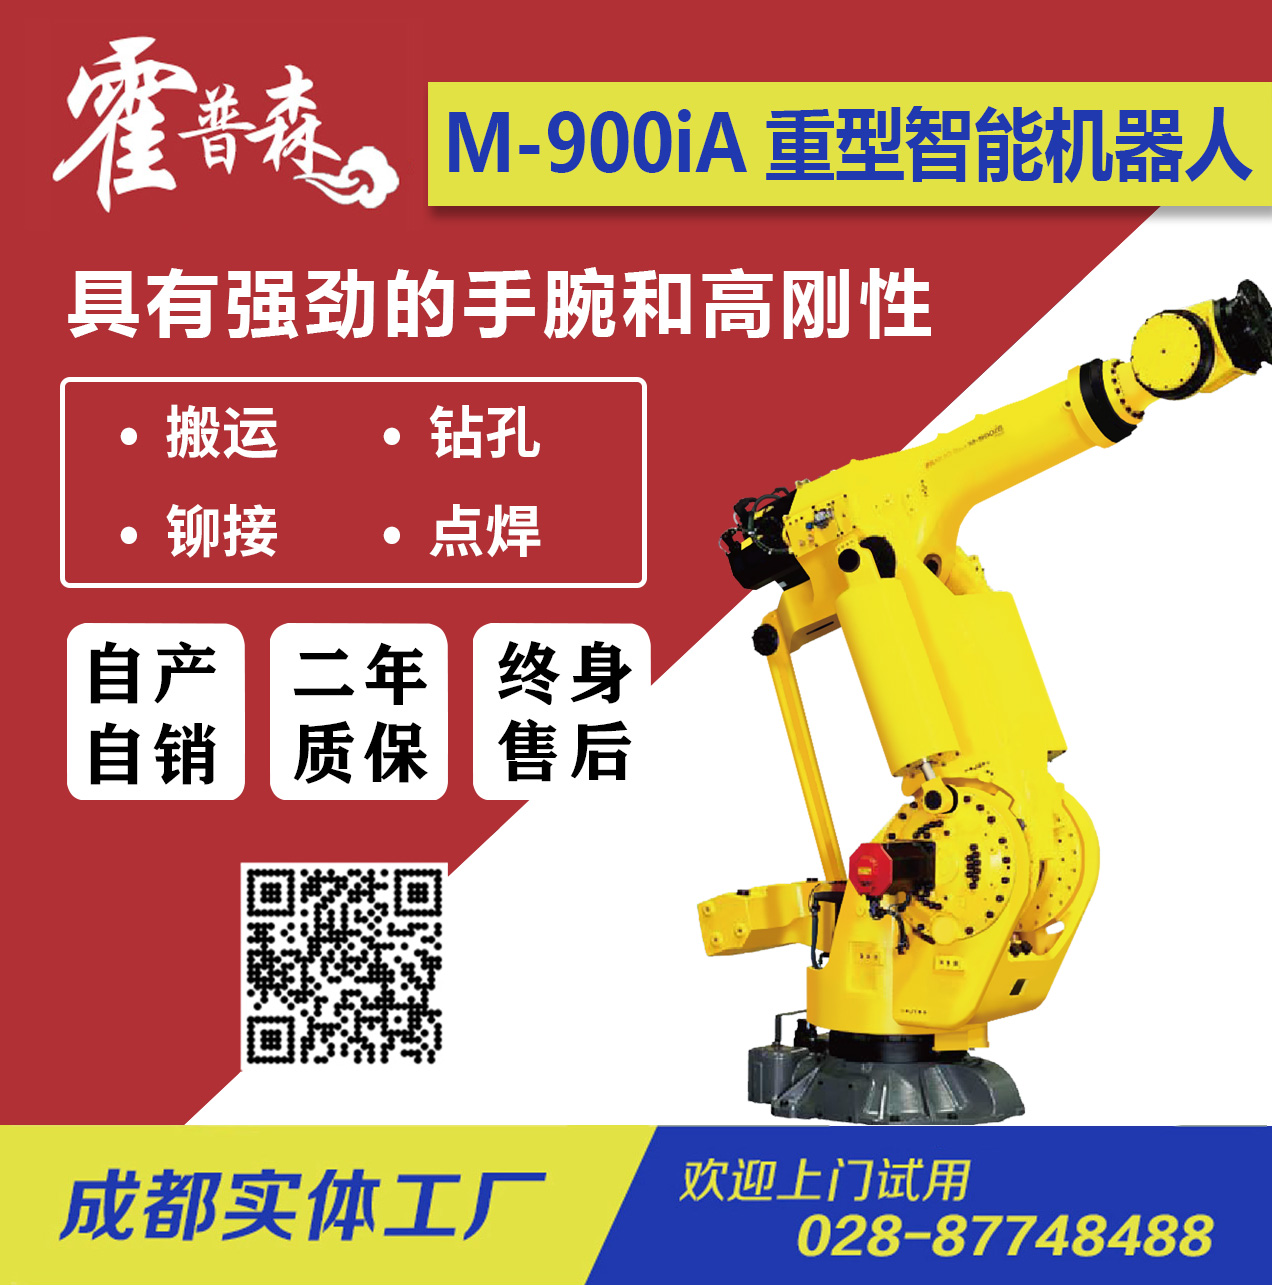 FANUC-Robot M-900iB /点焊/搬运/组装/码垛重型智能机器人